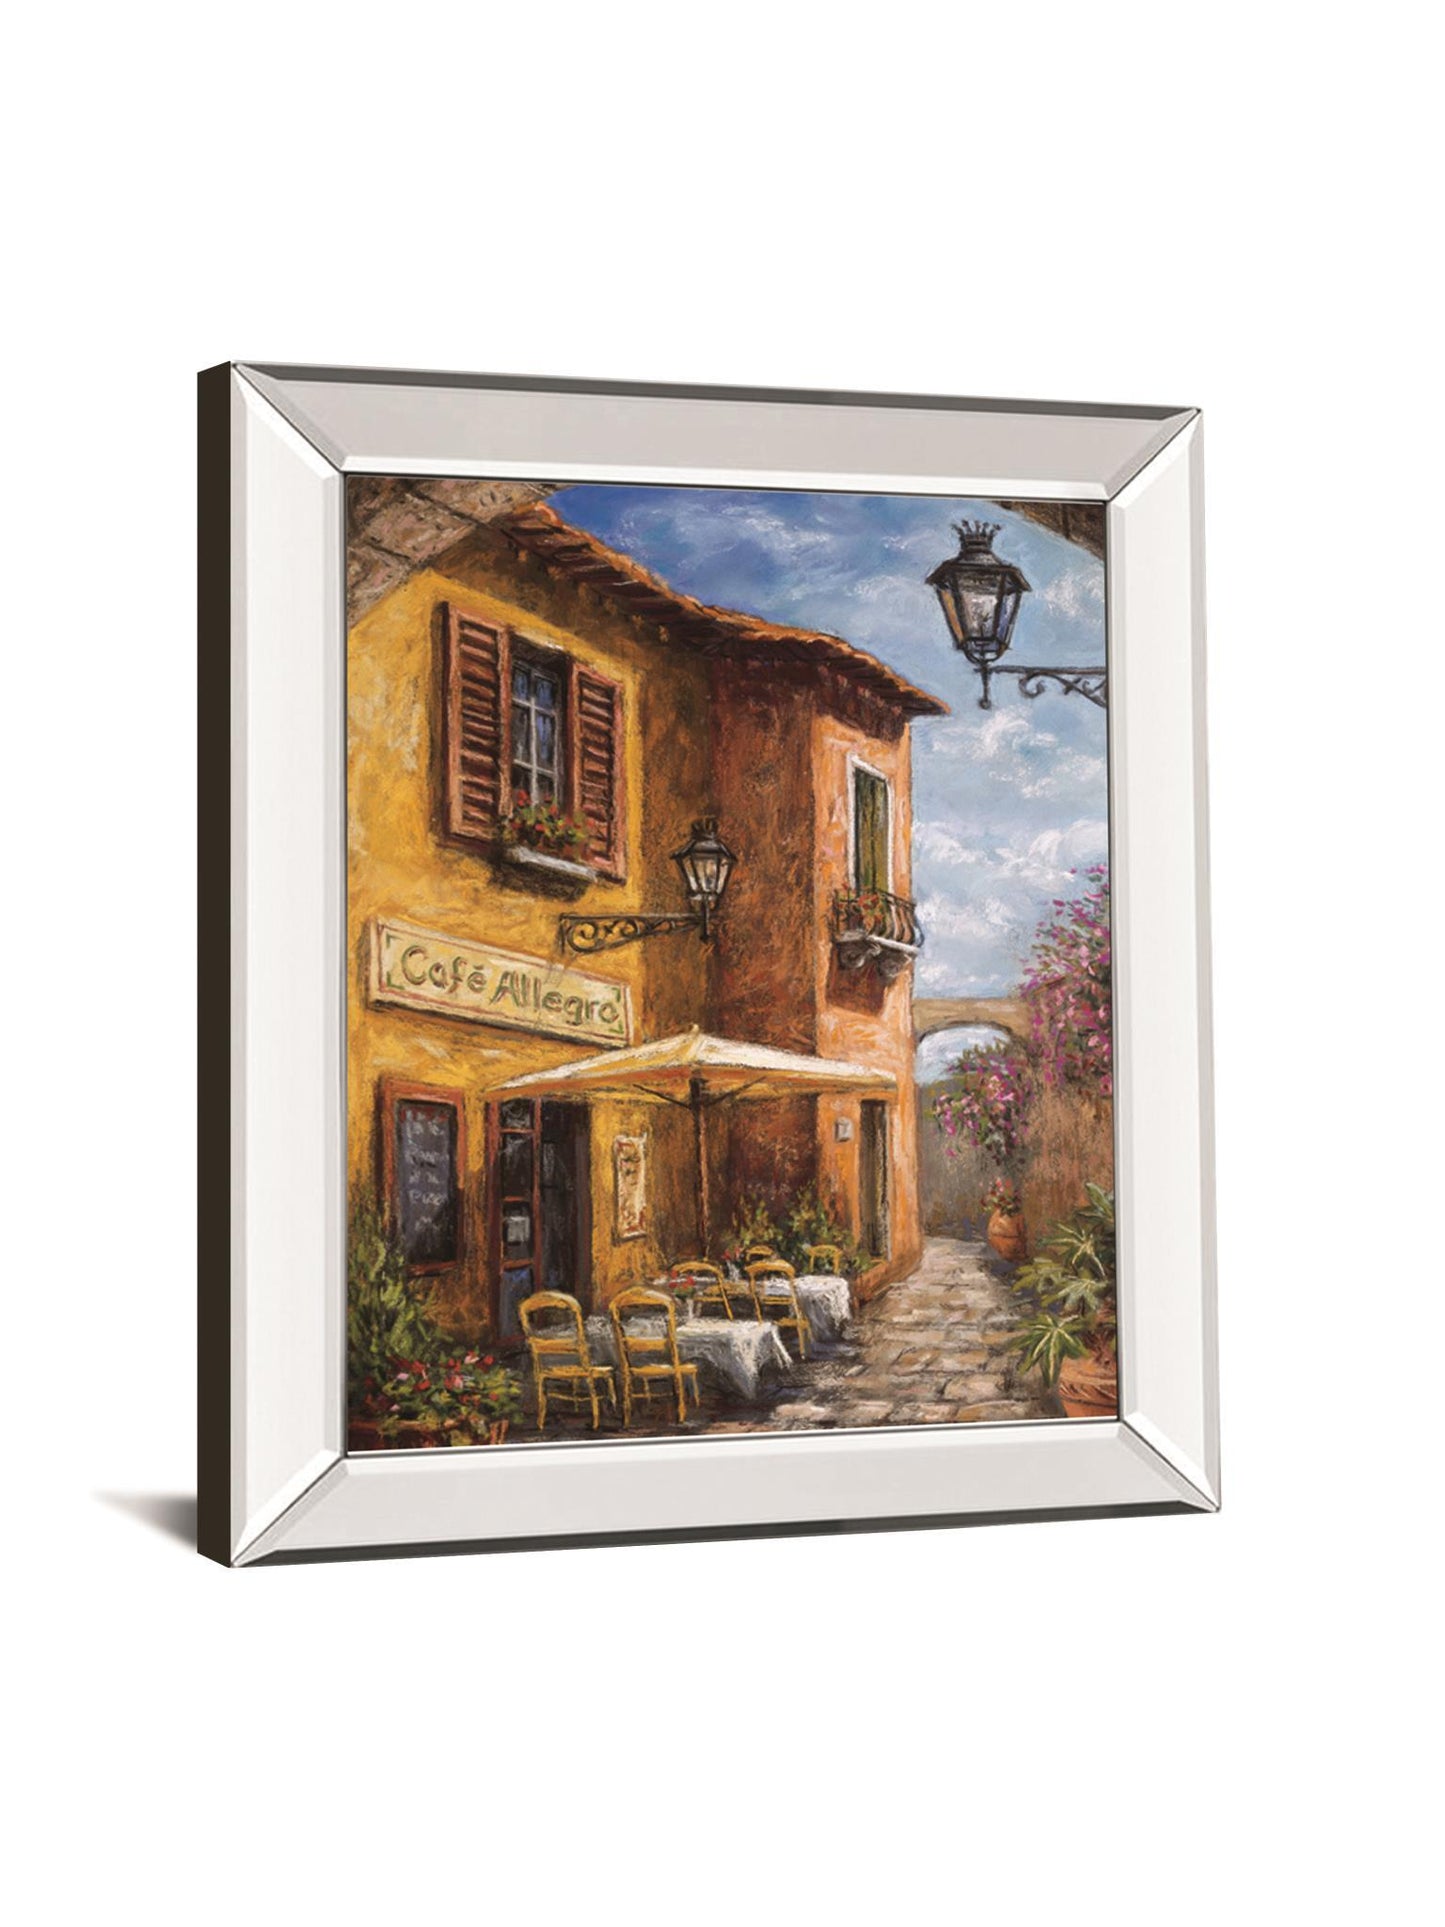 Courtyard Cafe By Surridge, M - Mirror Framed Print Wall Art - Light Brown